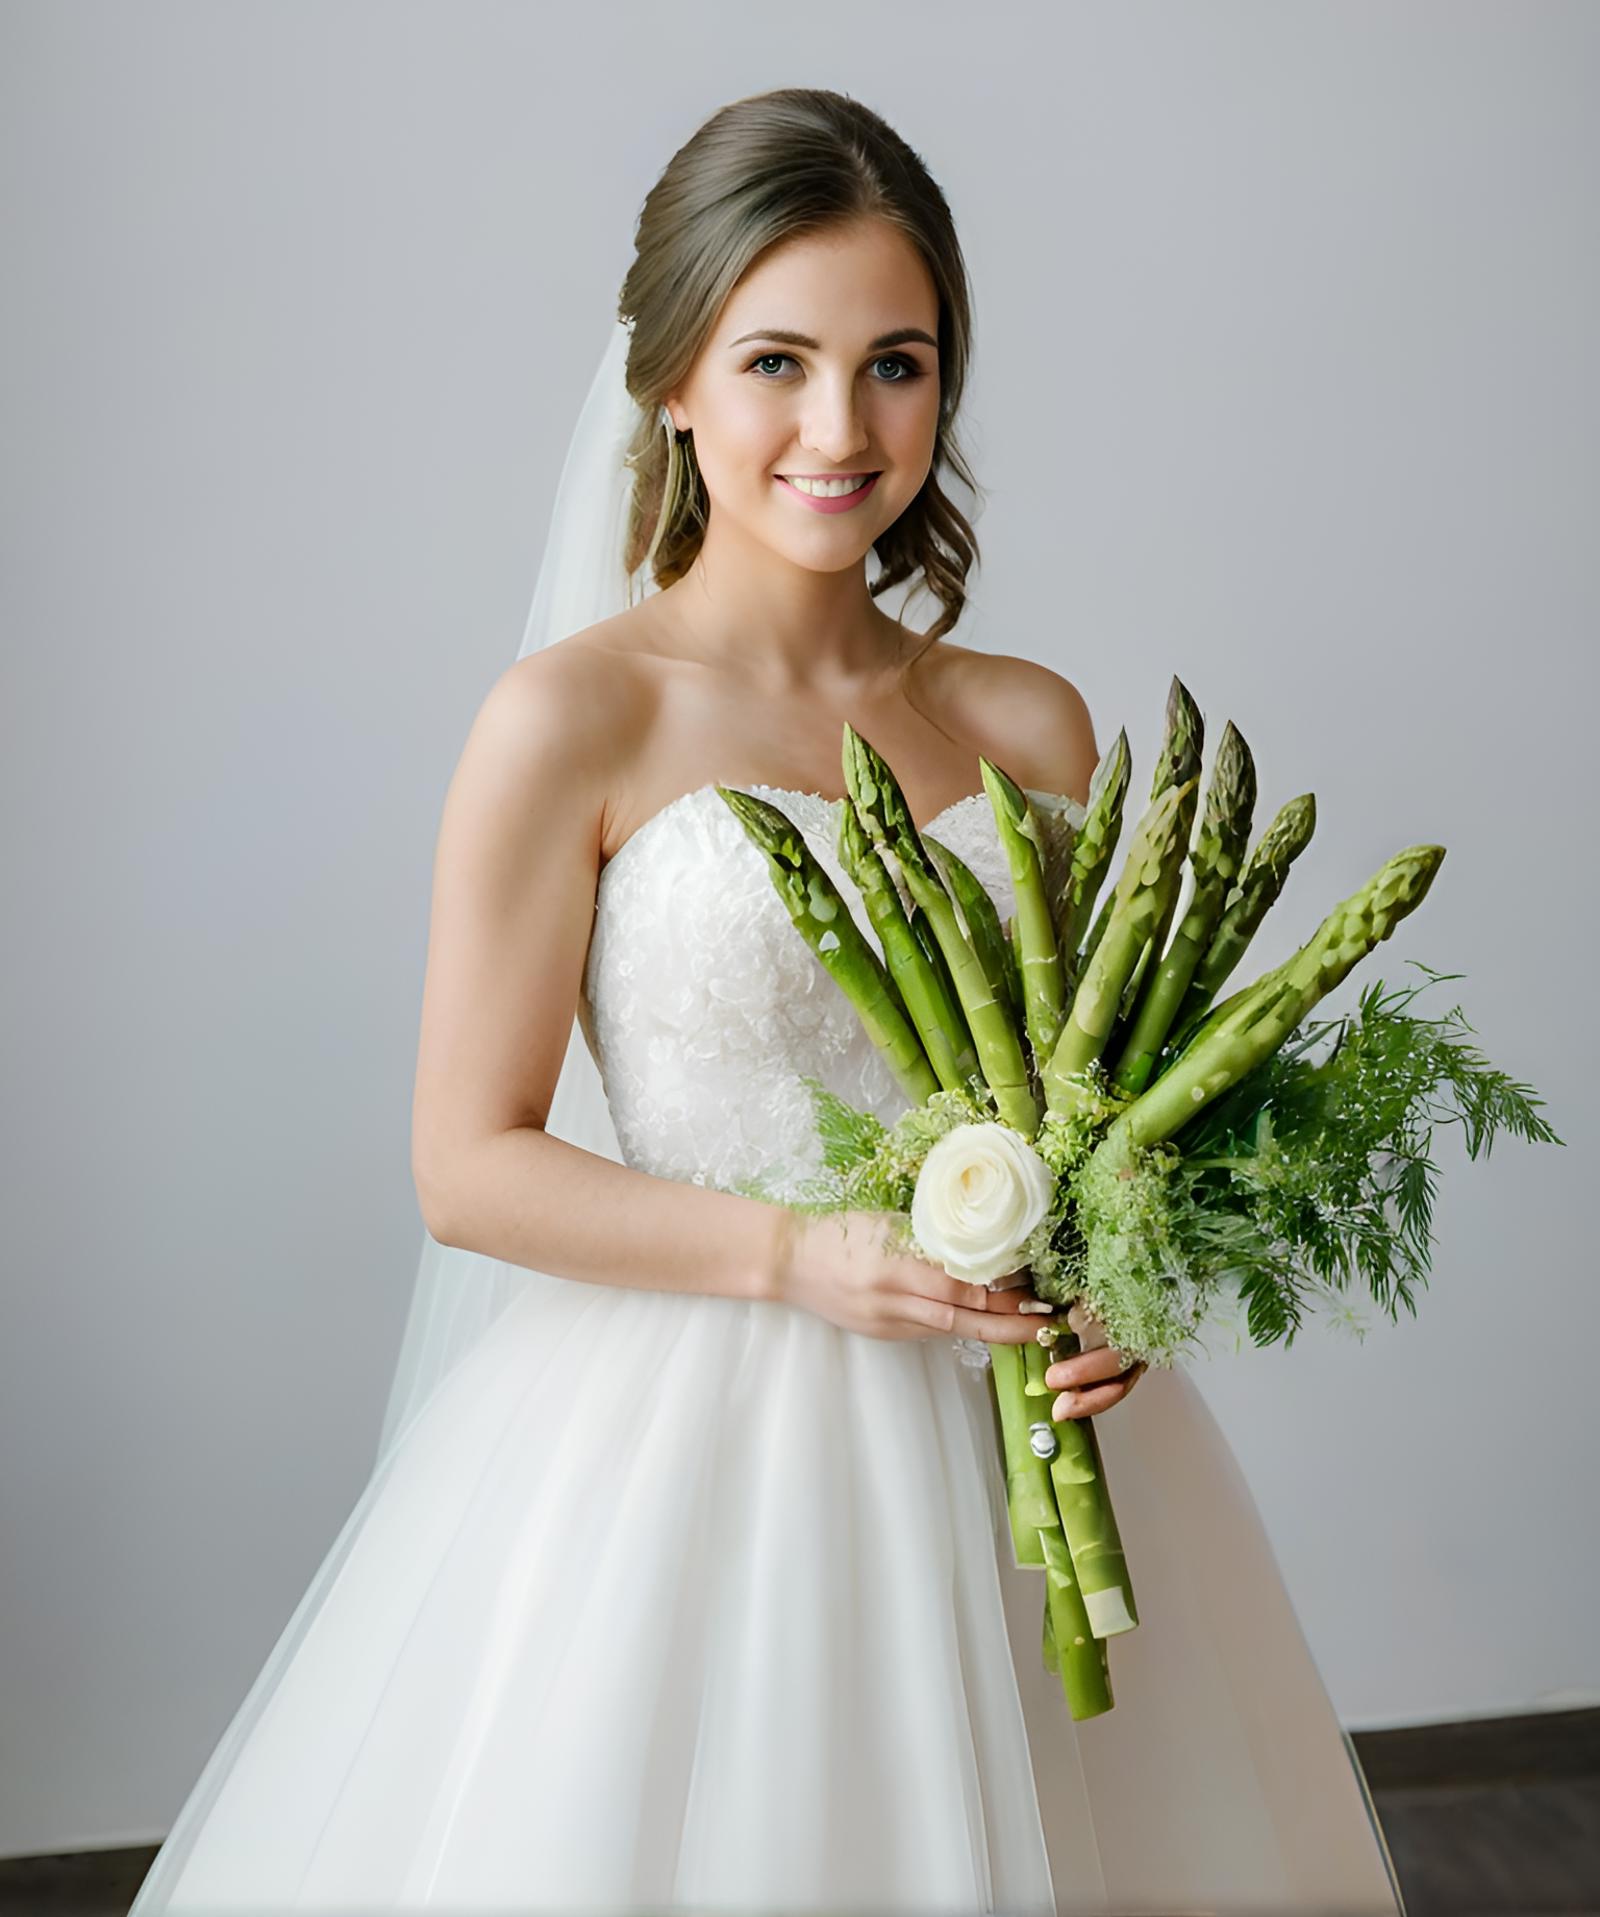 Bridal Dress image by koholos